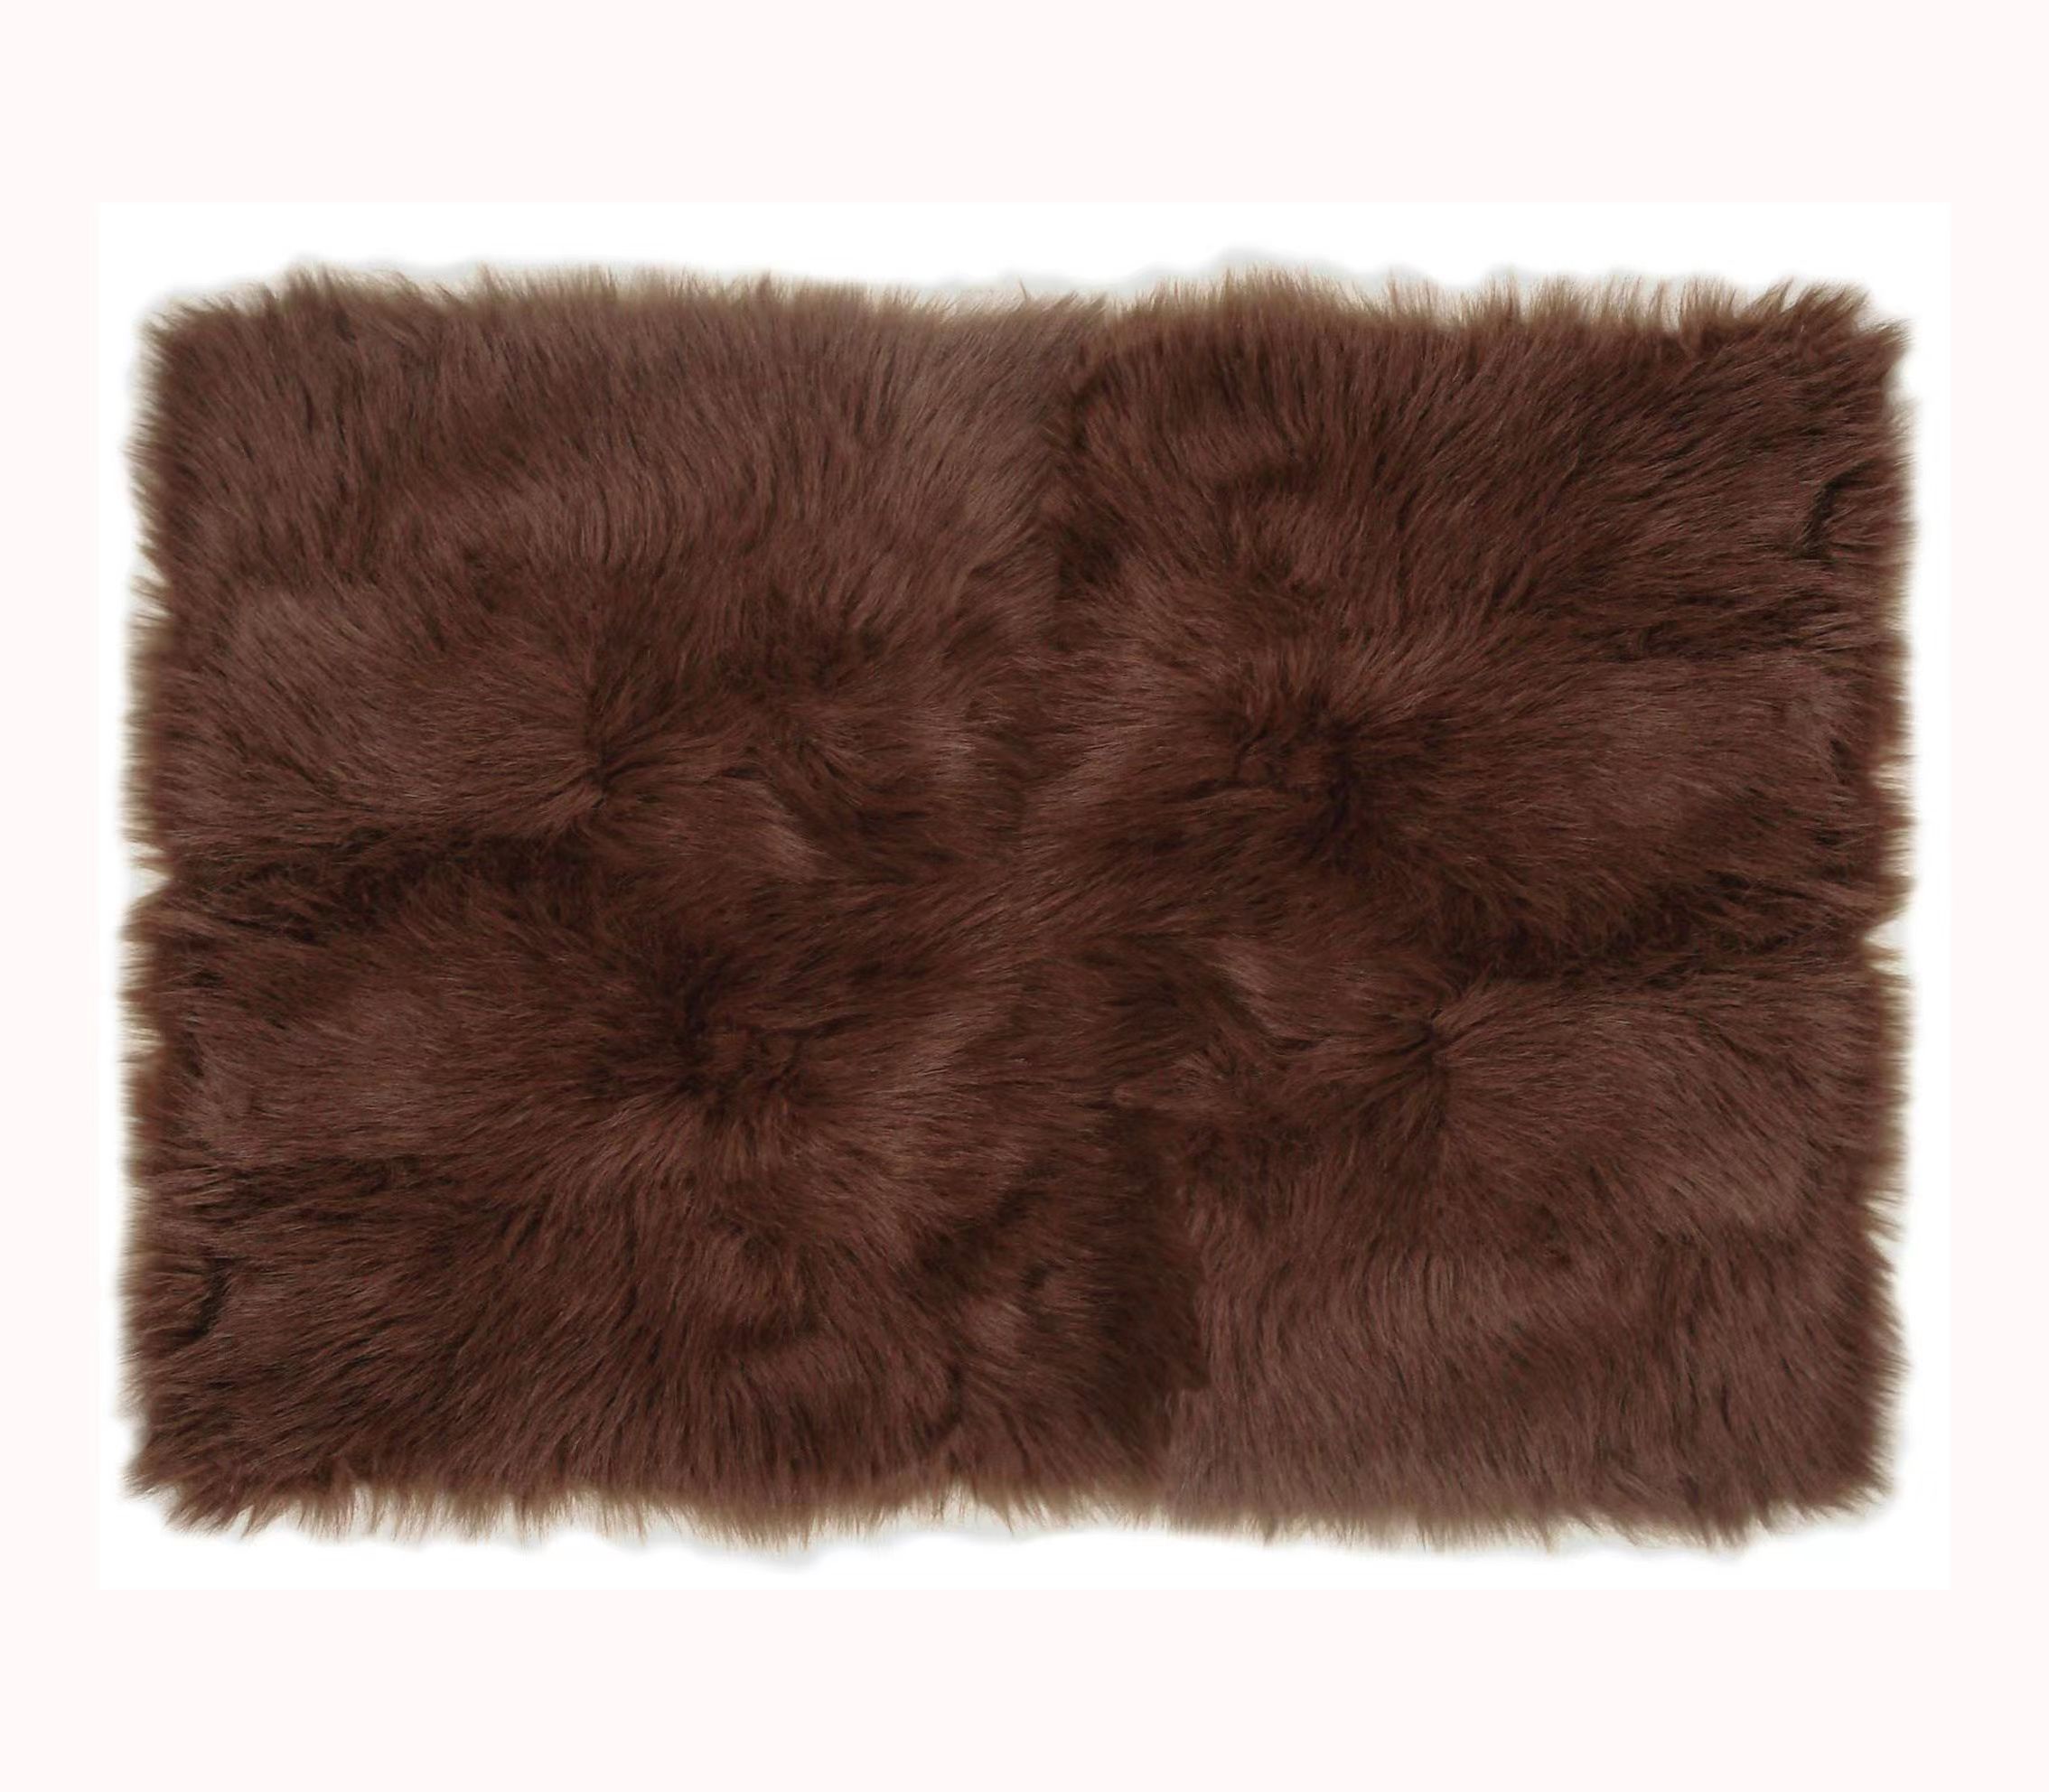 Cherry Super Soft Faux Fur Area Rugs